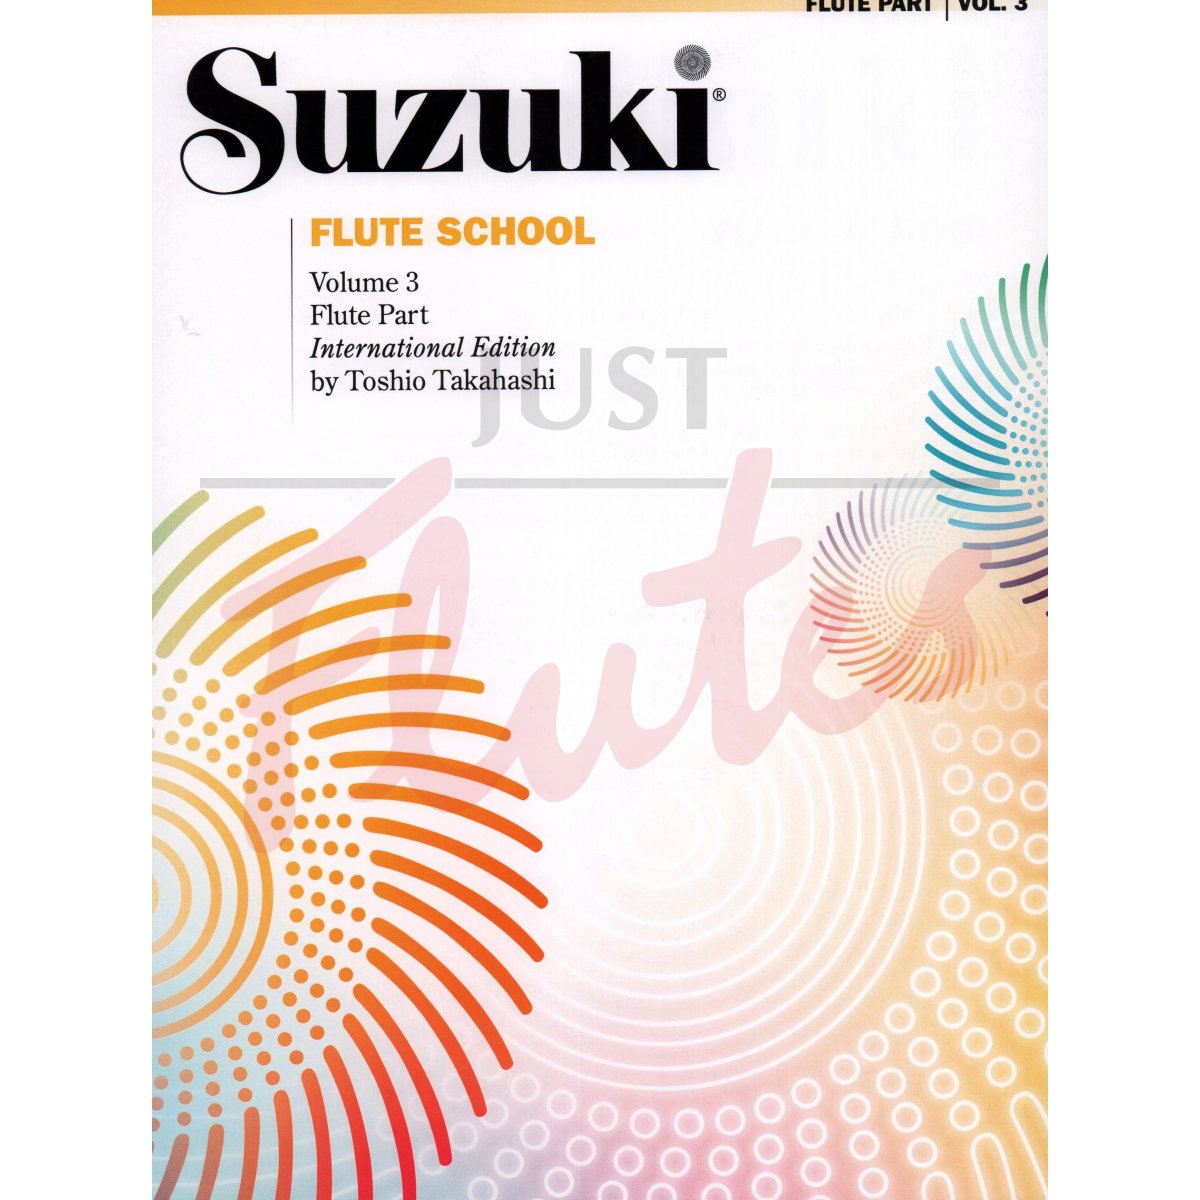 Suzuki Flute School Vol 3 (Revised Edition) [Flute Part]